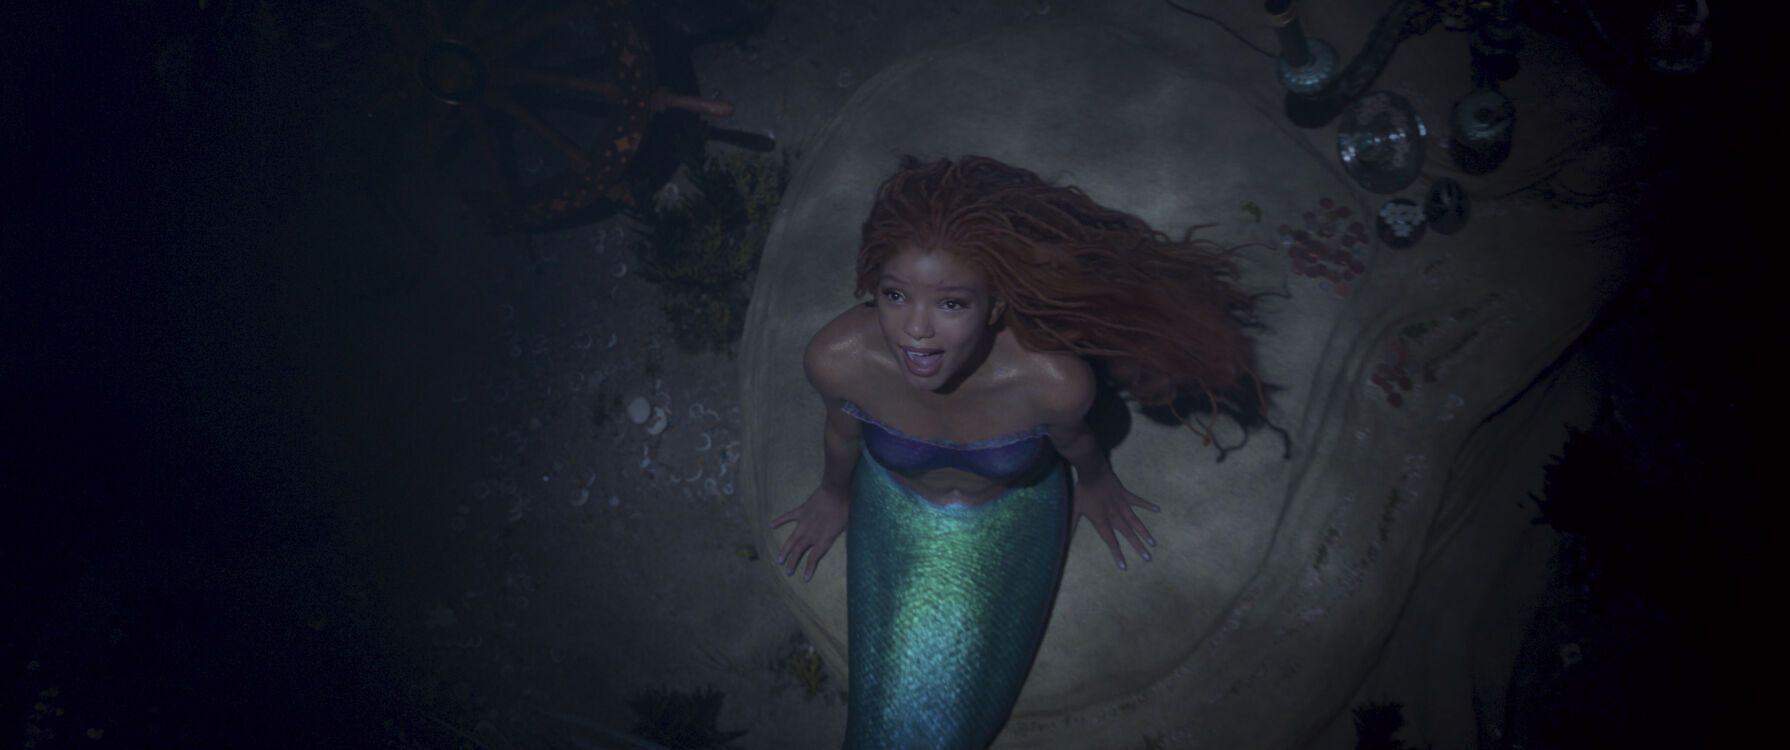 The Little Mermaid (OV versie)